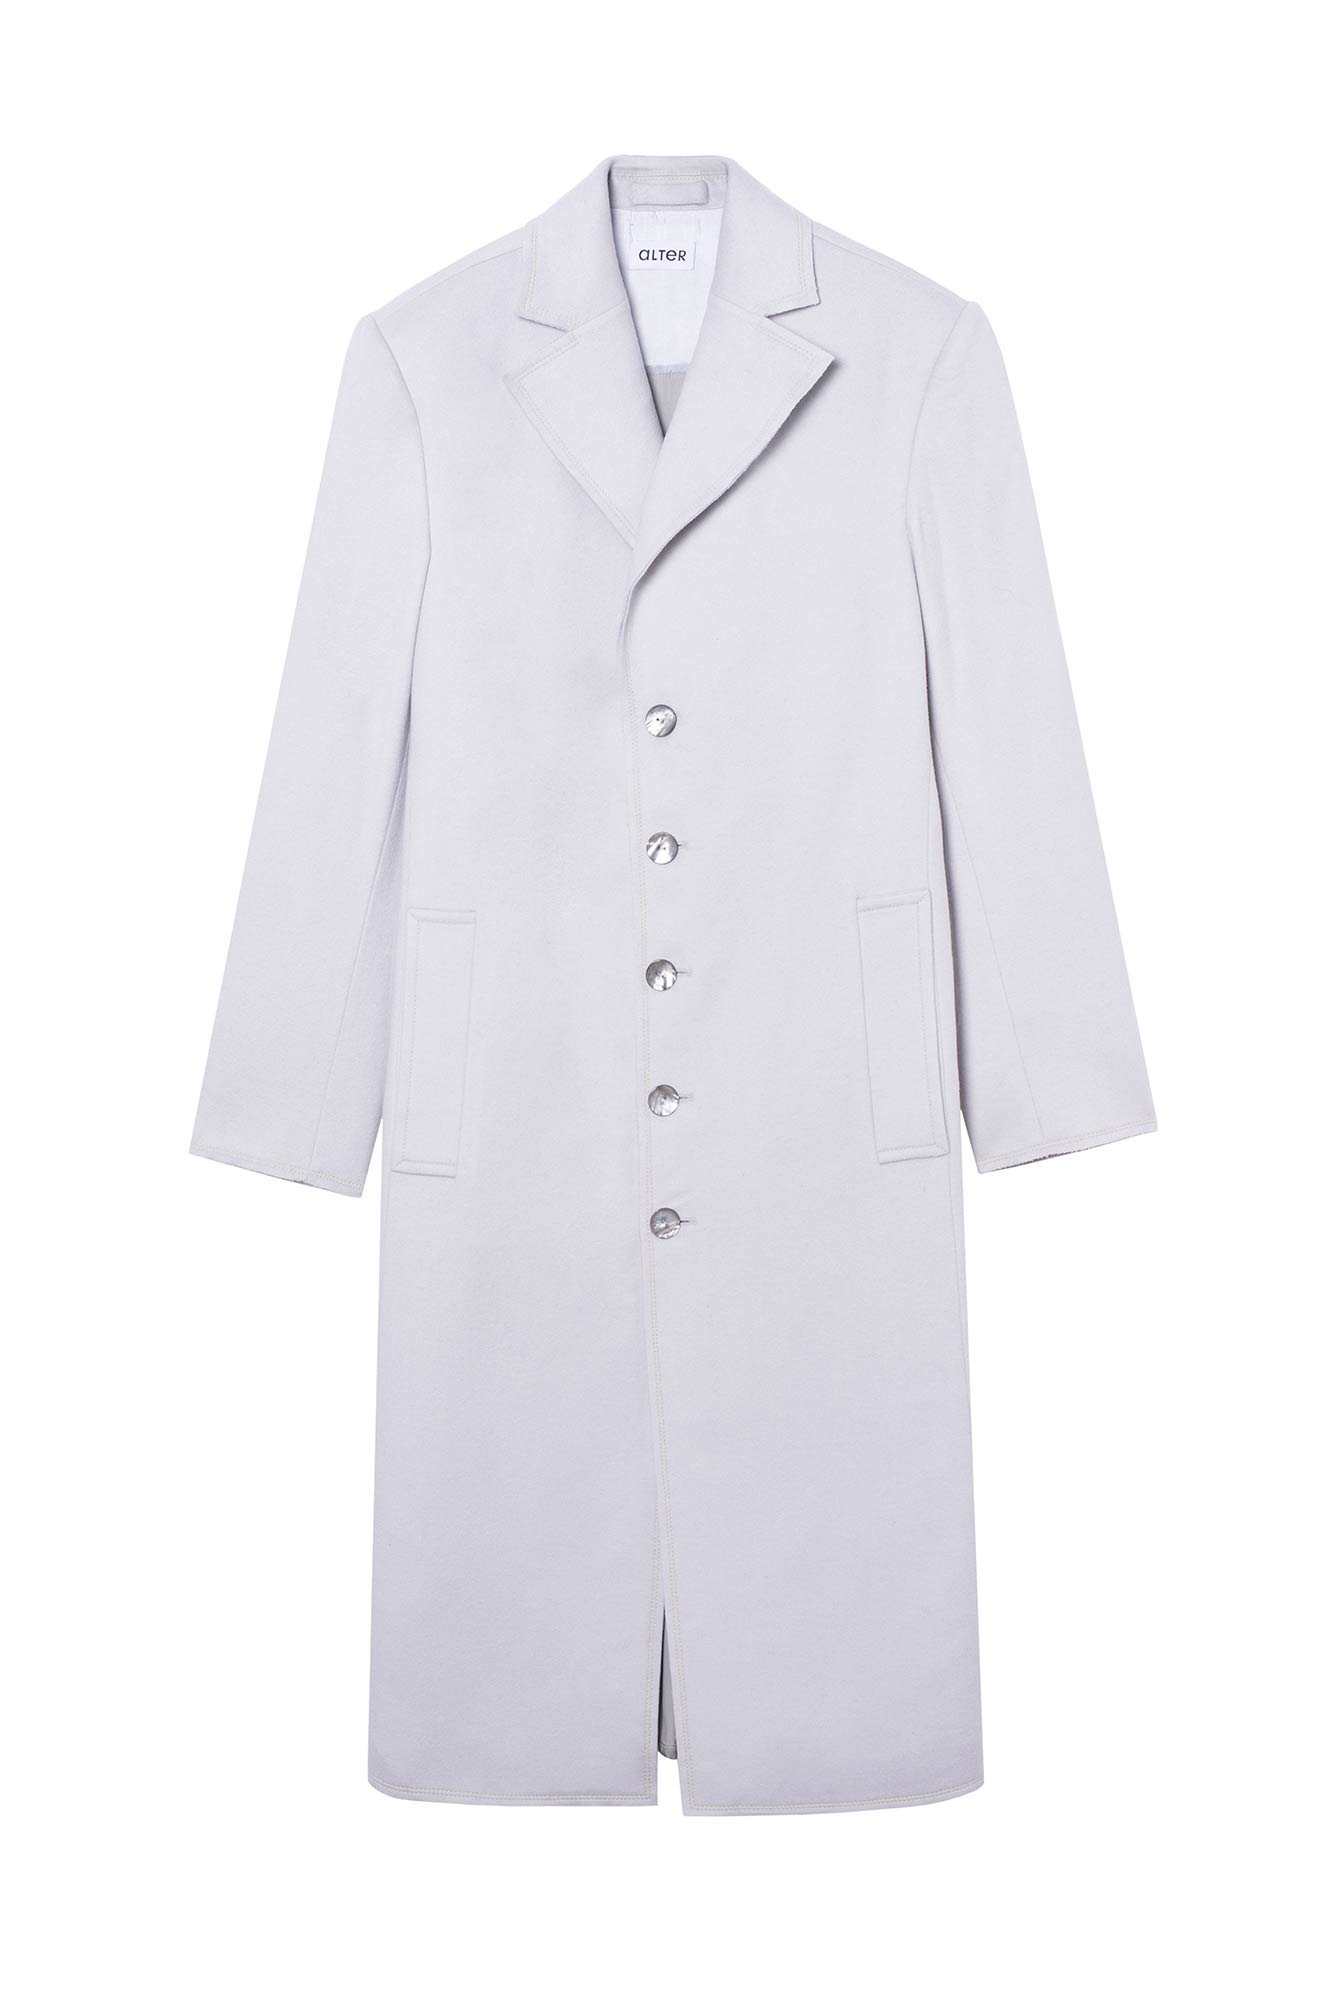 Chanel Ruffled-Collar Sequin Tweed Jacket — UFO No More